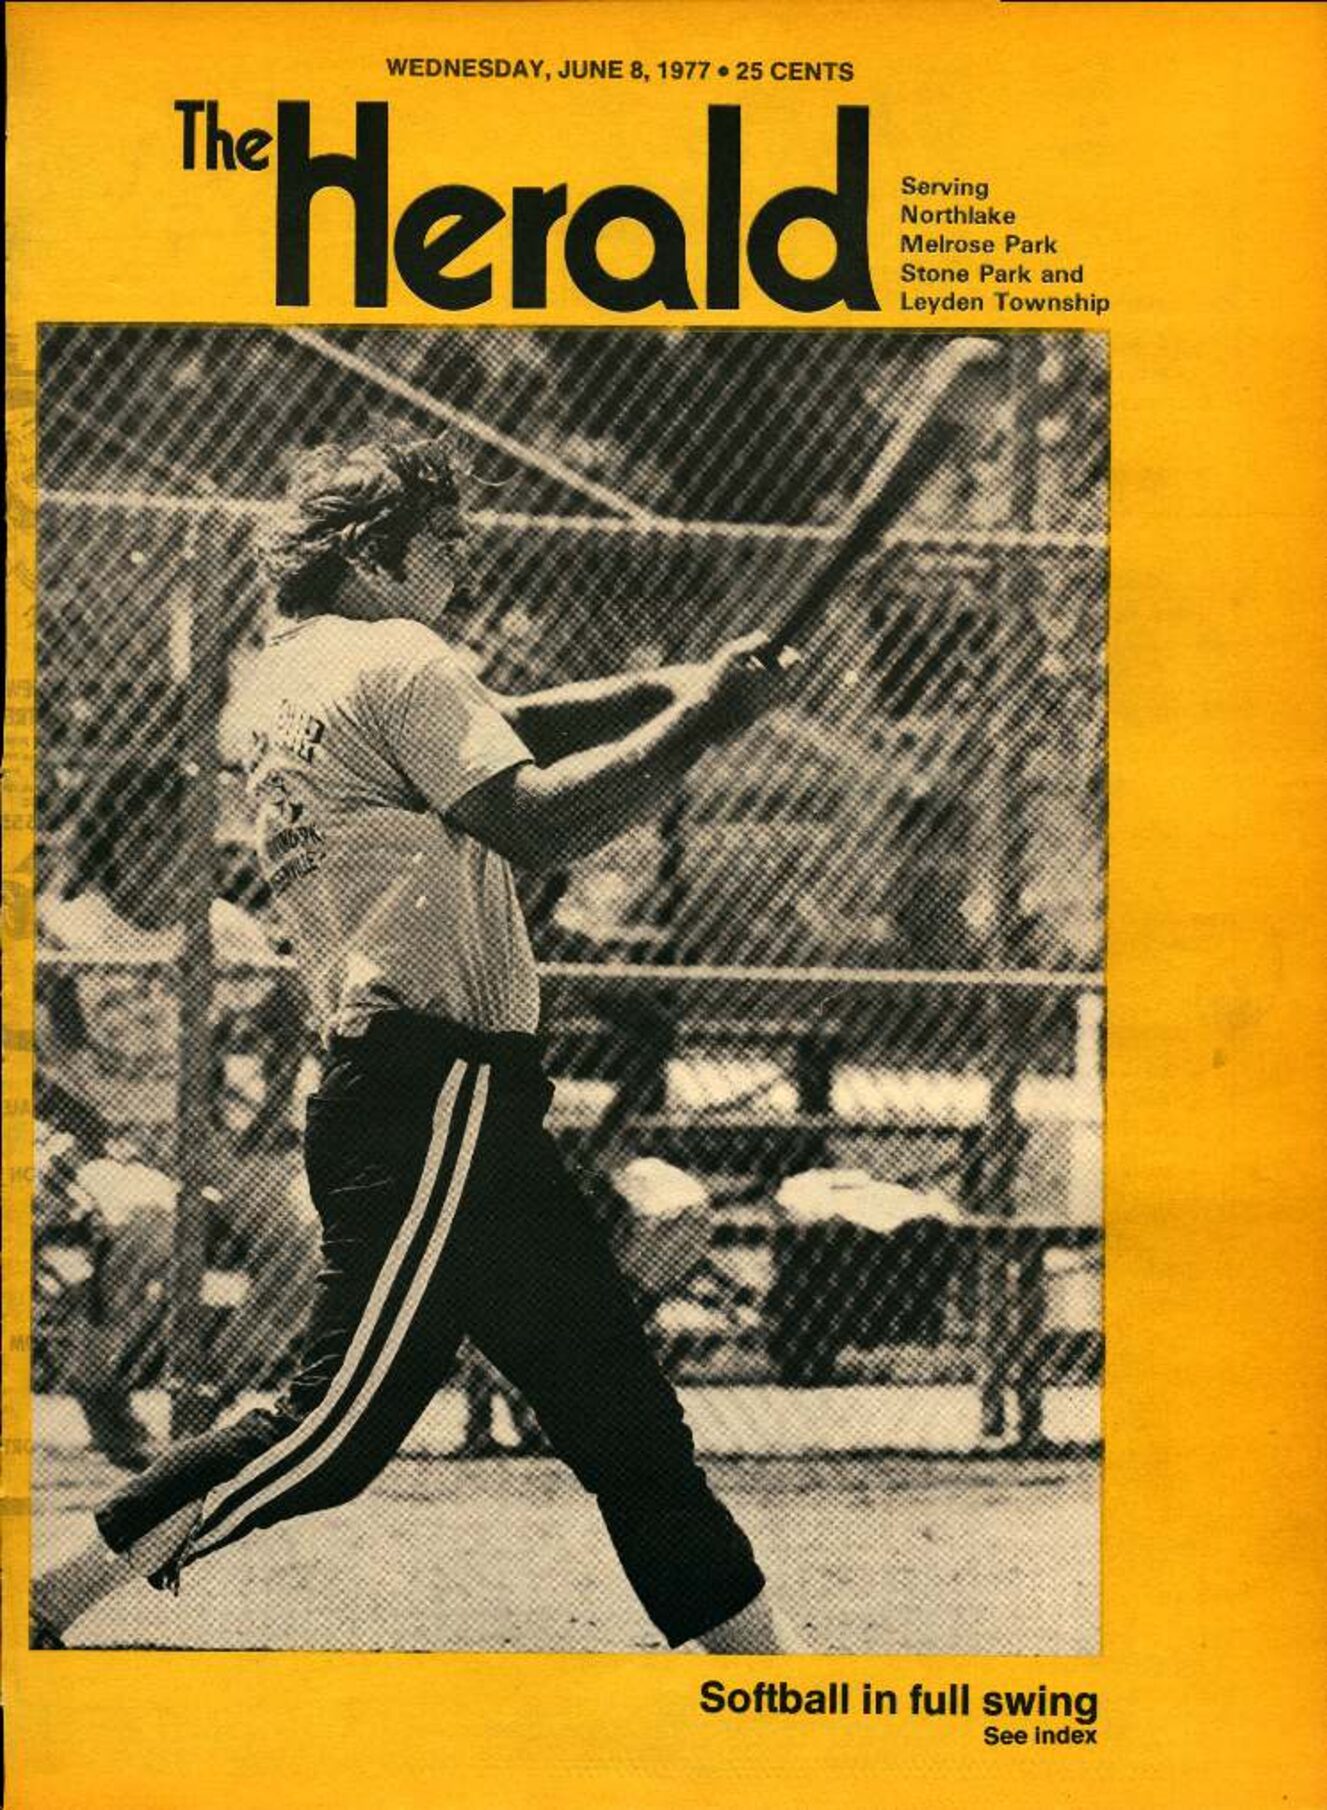 The Herald – 19770608